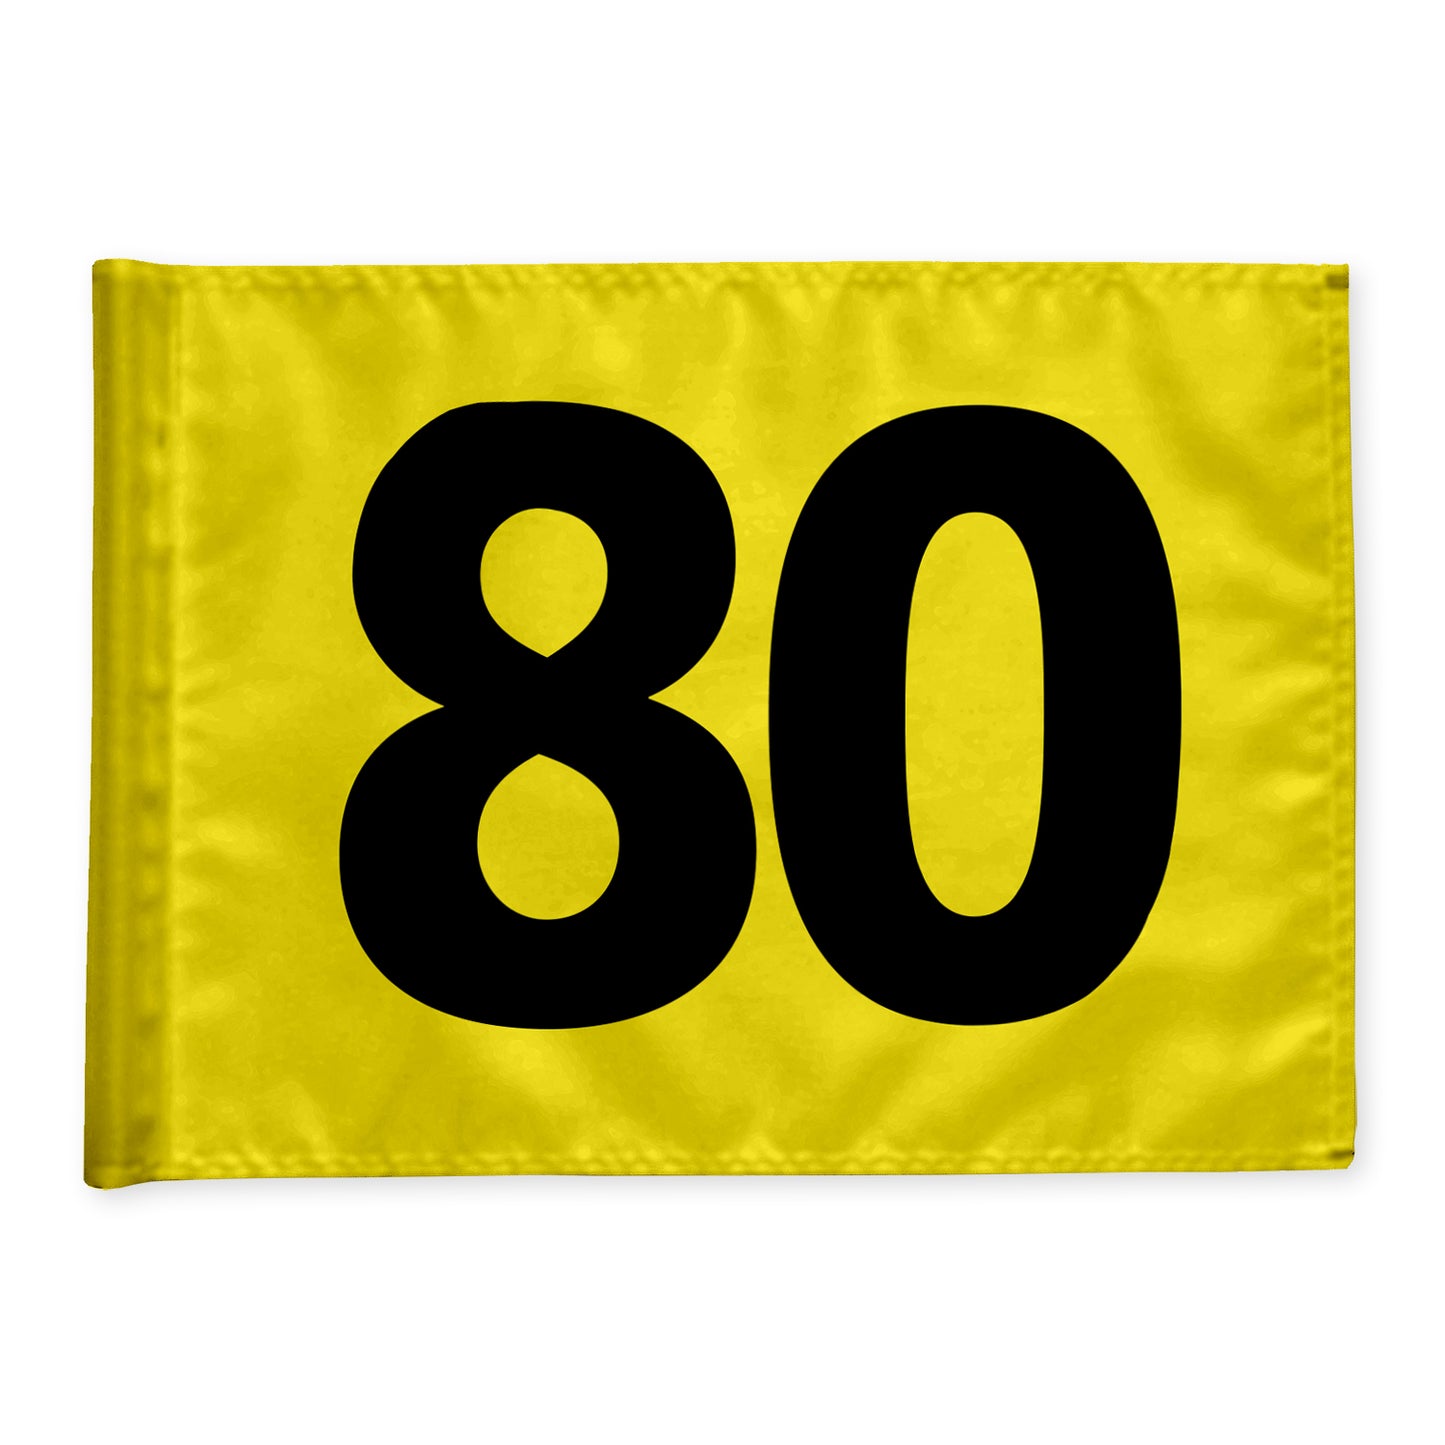 Driving range afstandsflag 80 m, gul med sorte tal, dobbelt 115 gram flagdug